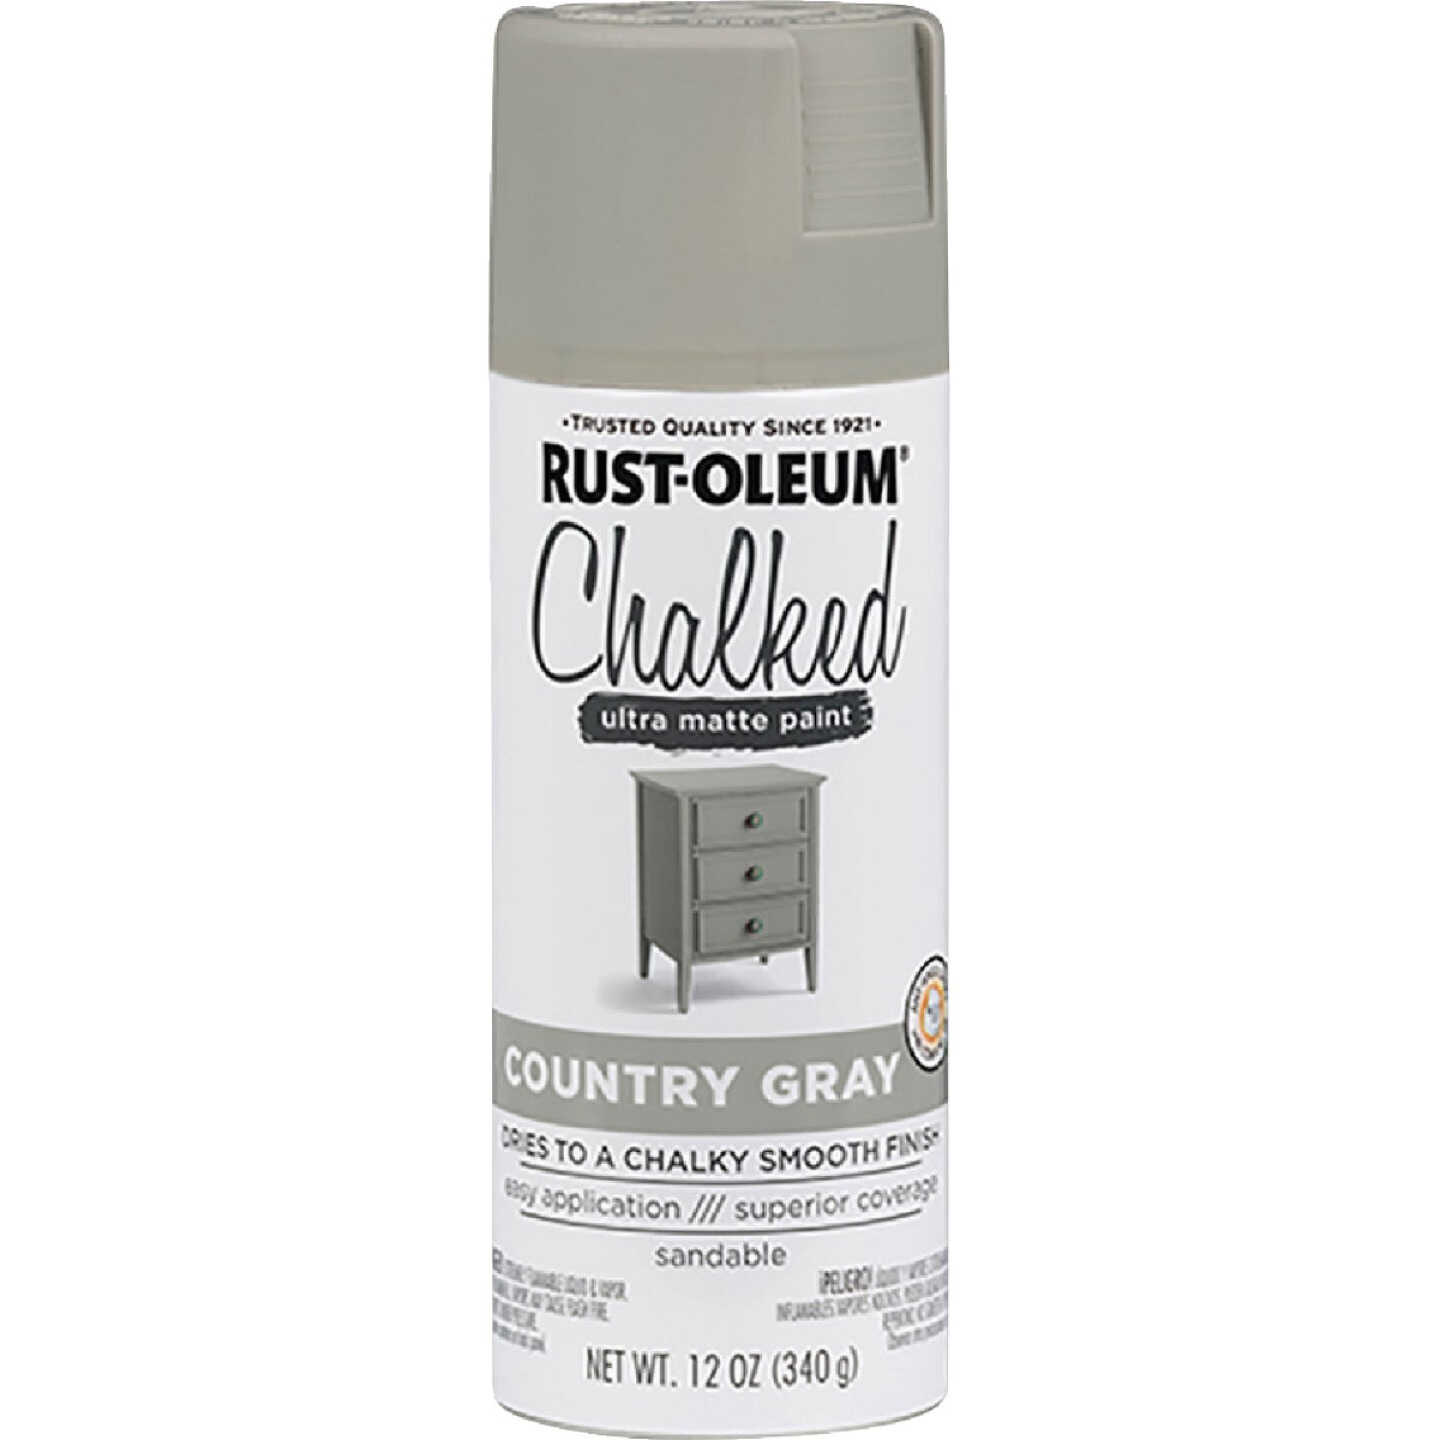  Outdoor Fabric Spray Paint - Medium Grey, 340 g